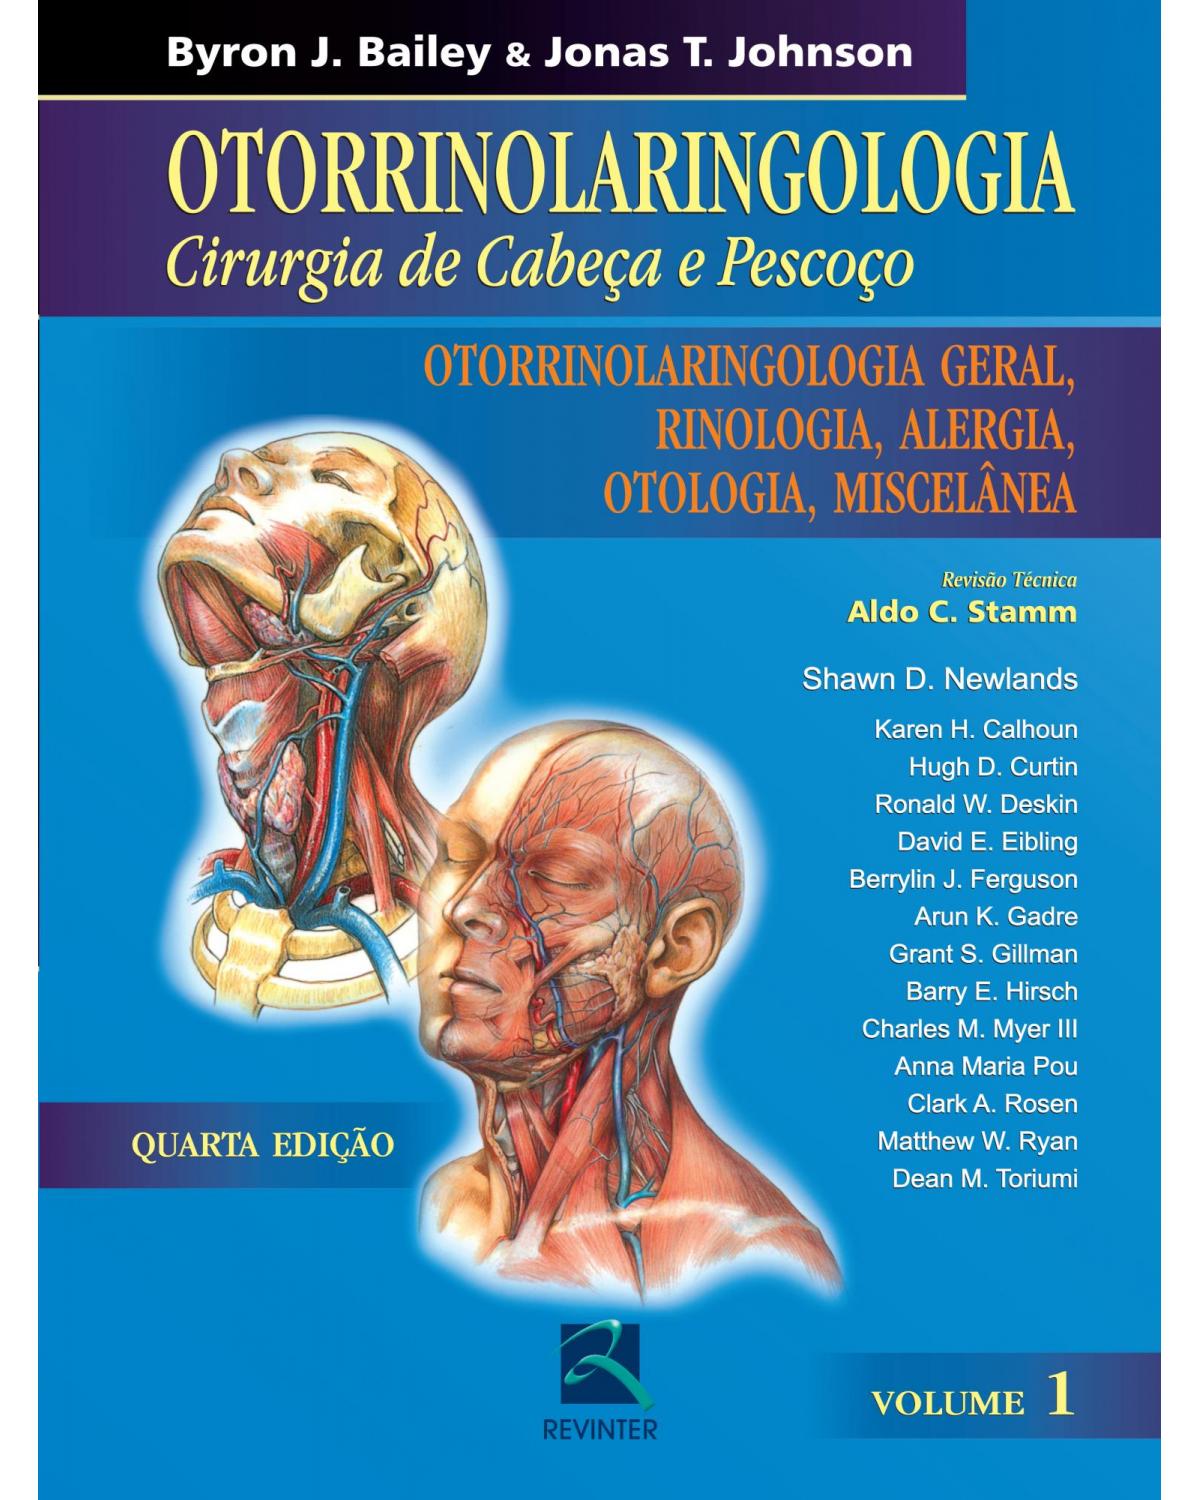 Otorrinolaringologia - Volume 1: cirurgia de cabeça e pescoço - Otorrinolaringologia geral, rinologia, alergia, otologia e miscelânea - 4ª Edição | 2010